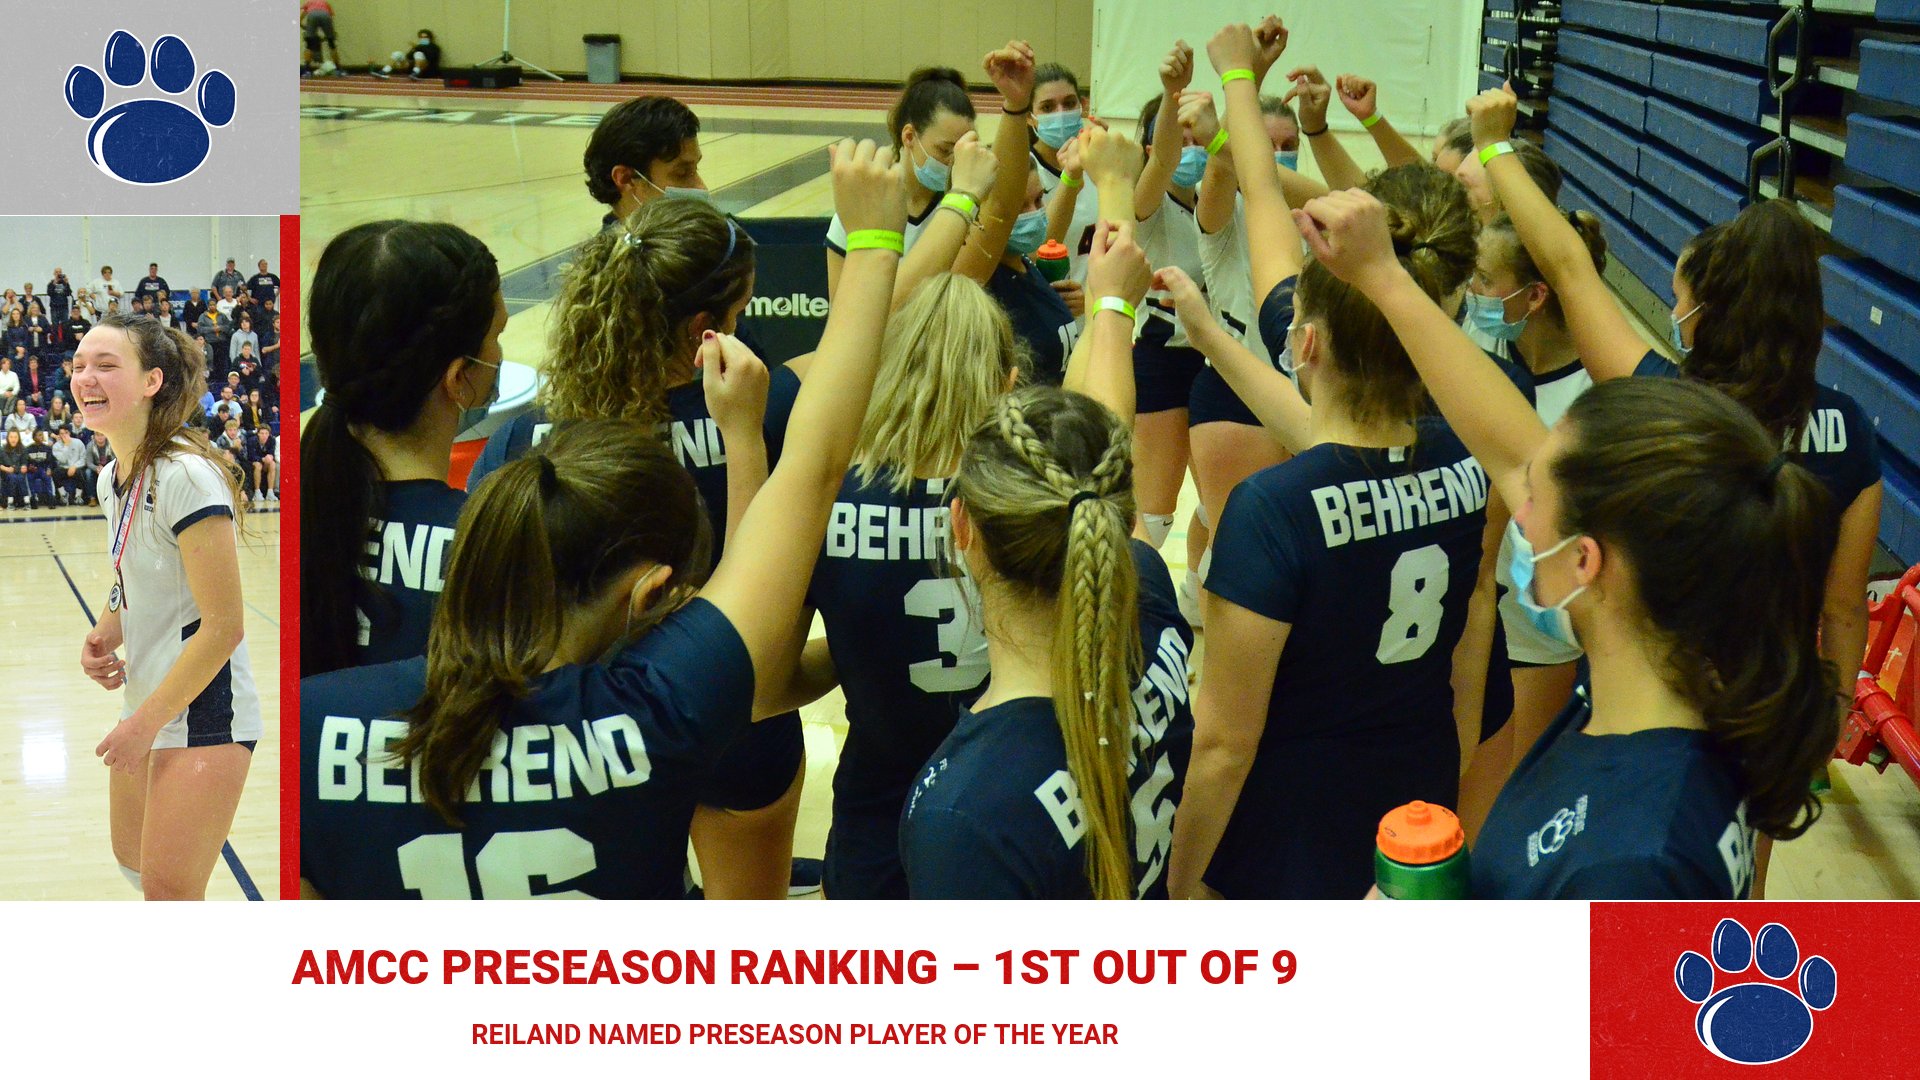 Behrend Women's Volleyball First in AMCC Preseason Poll